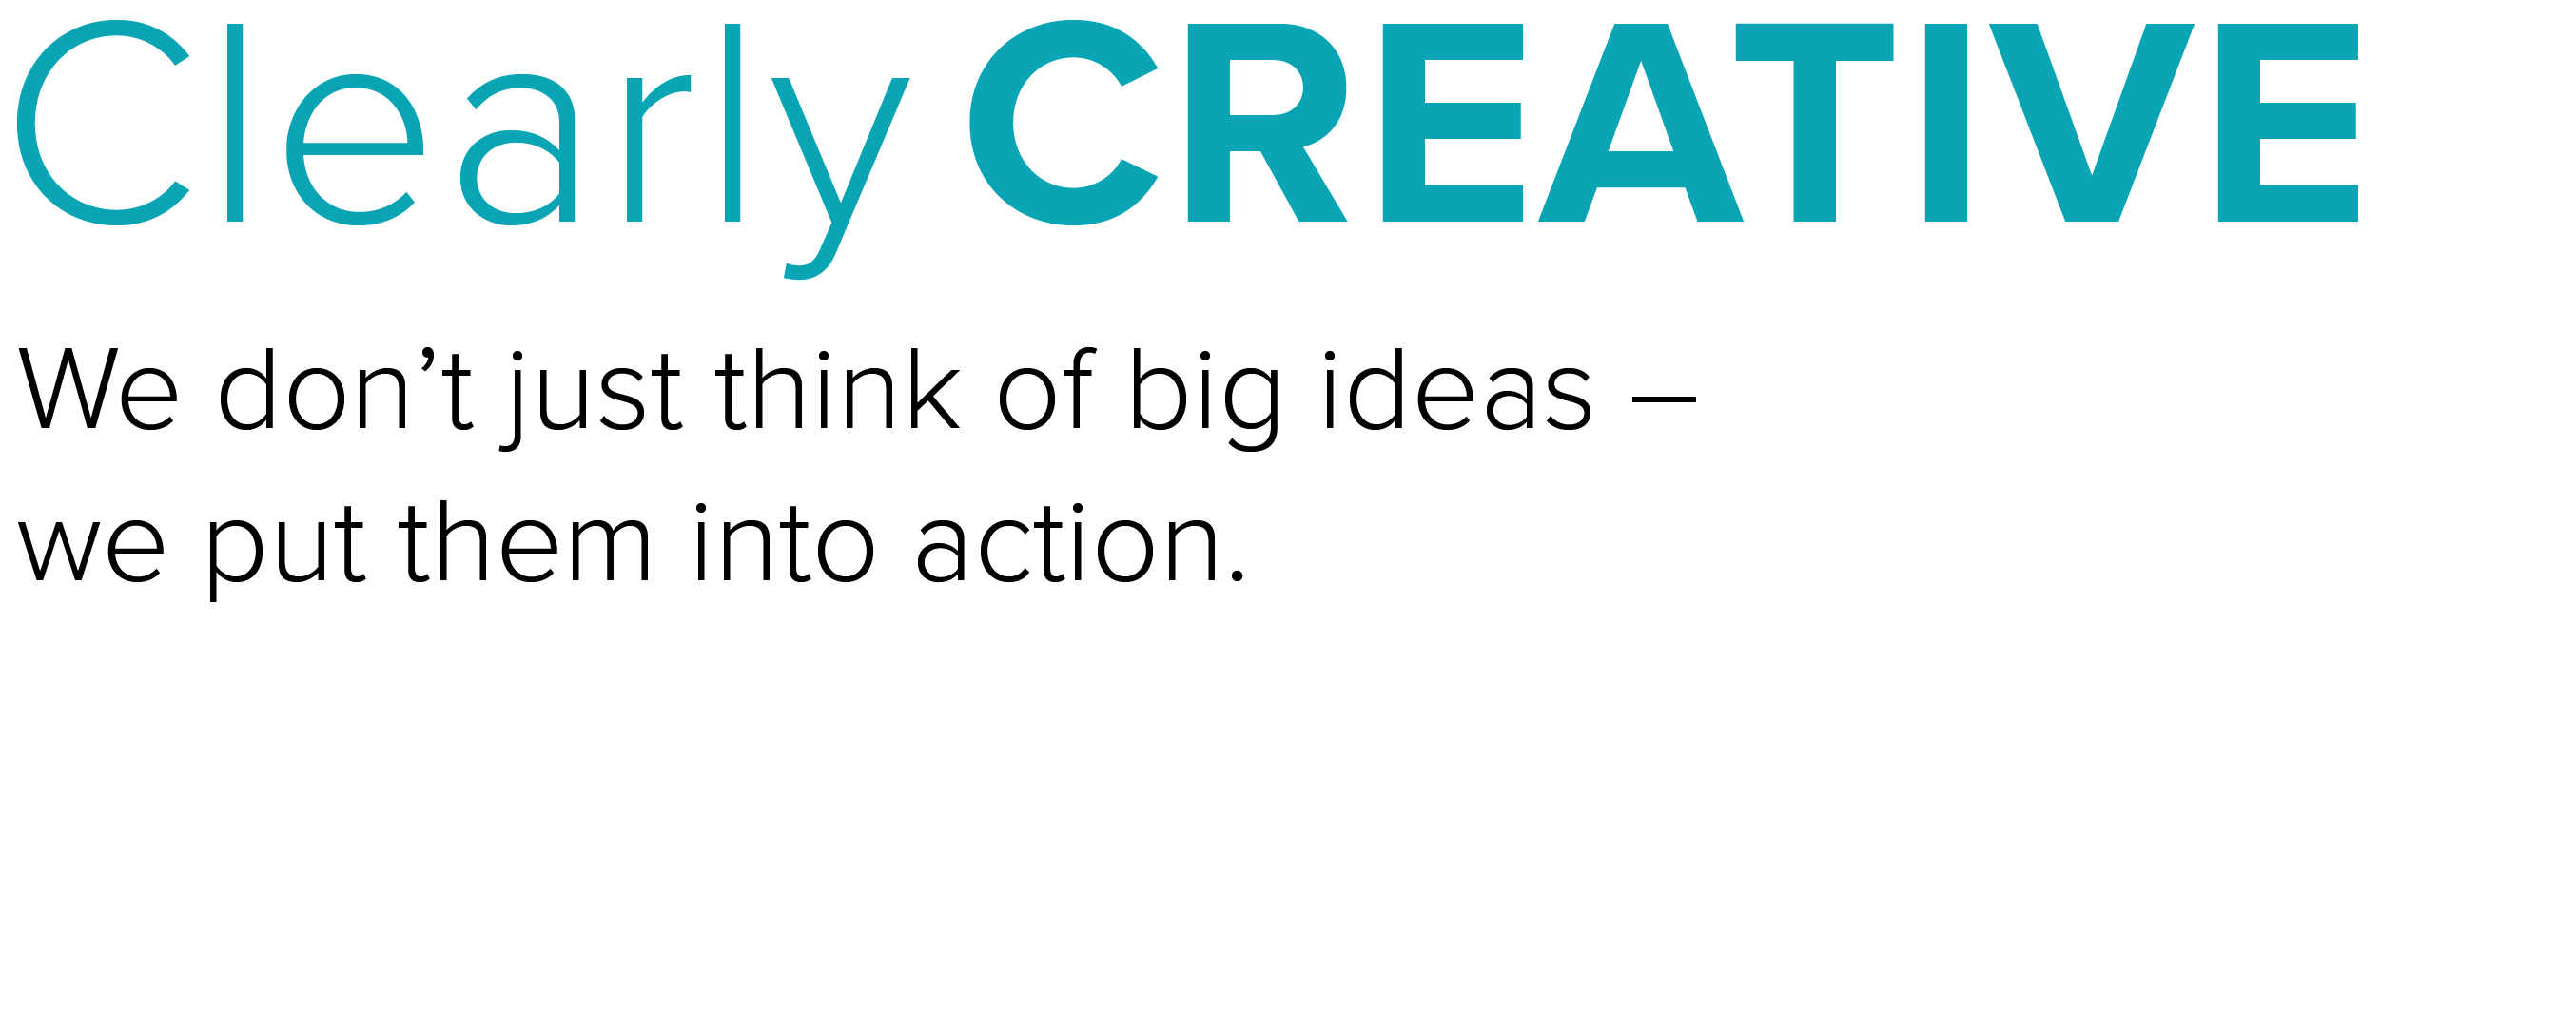 Cleary Creative